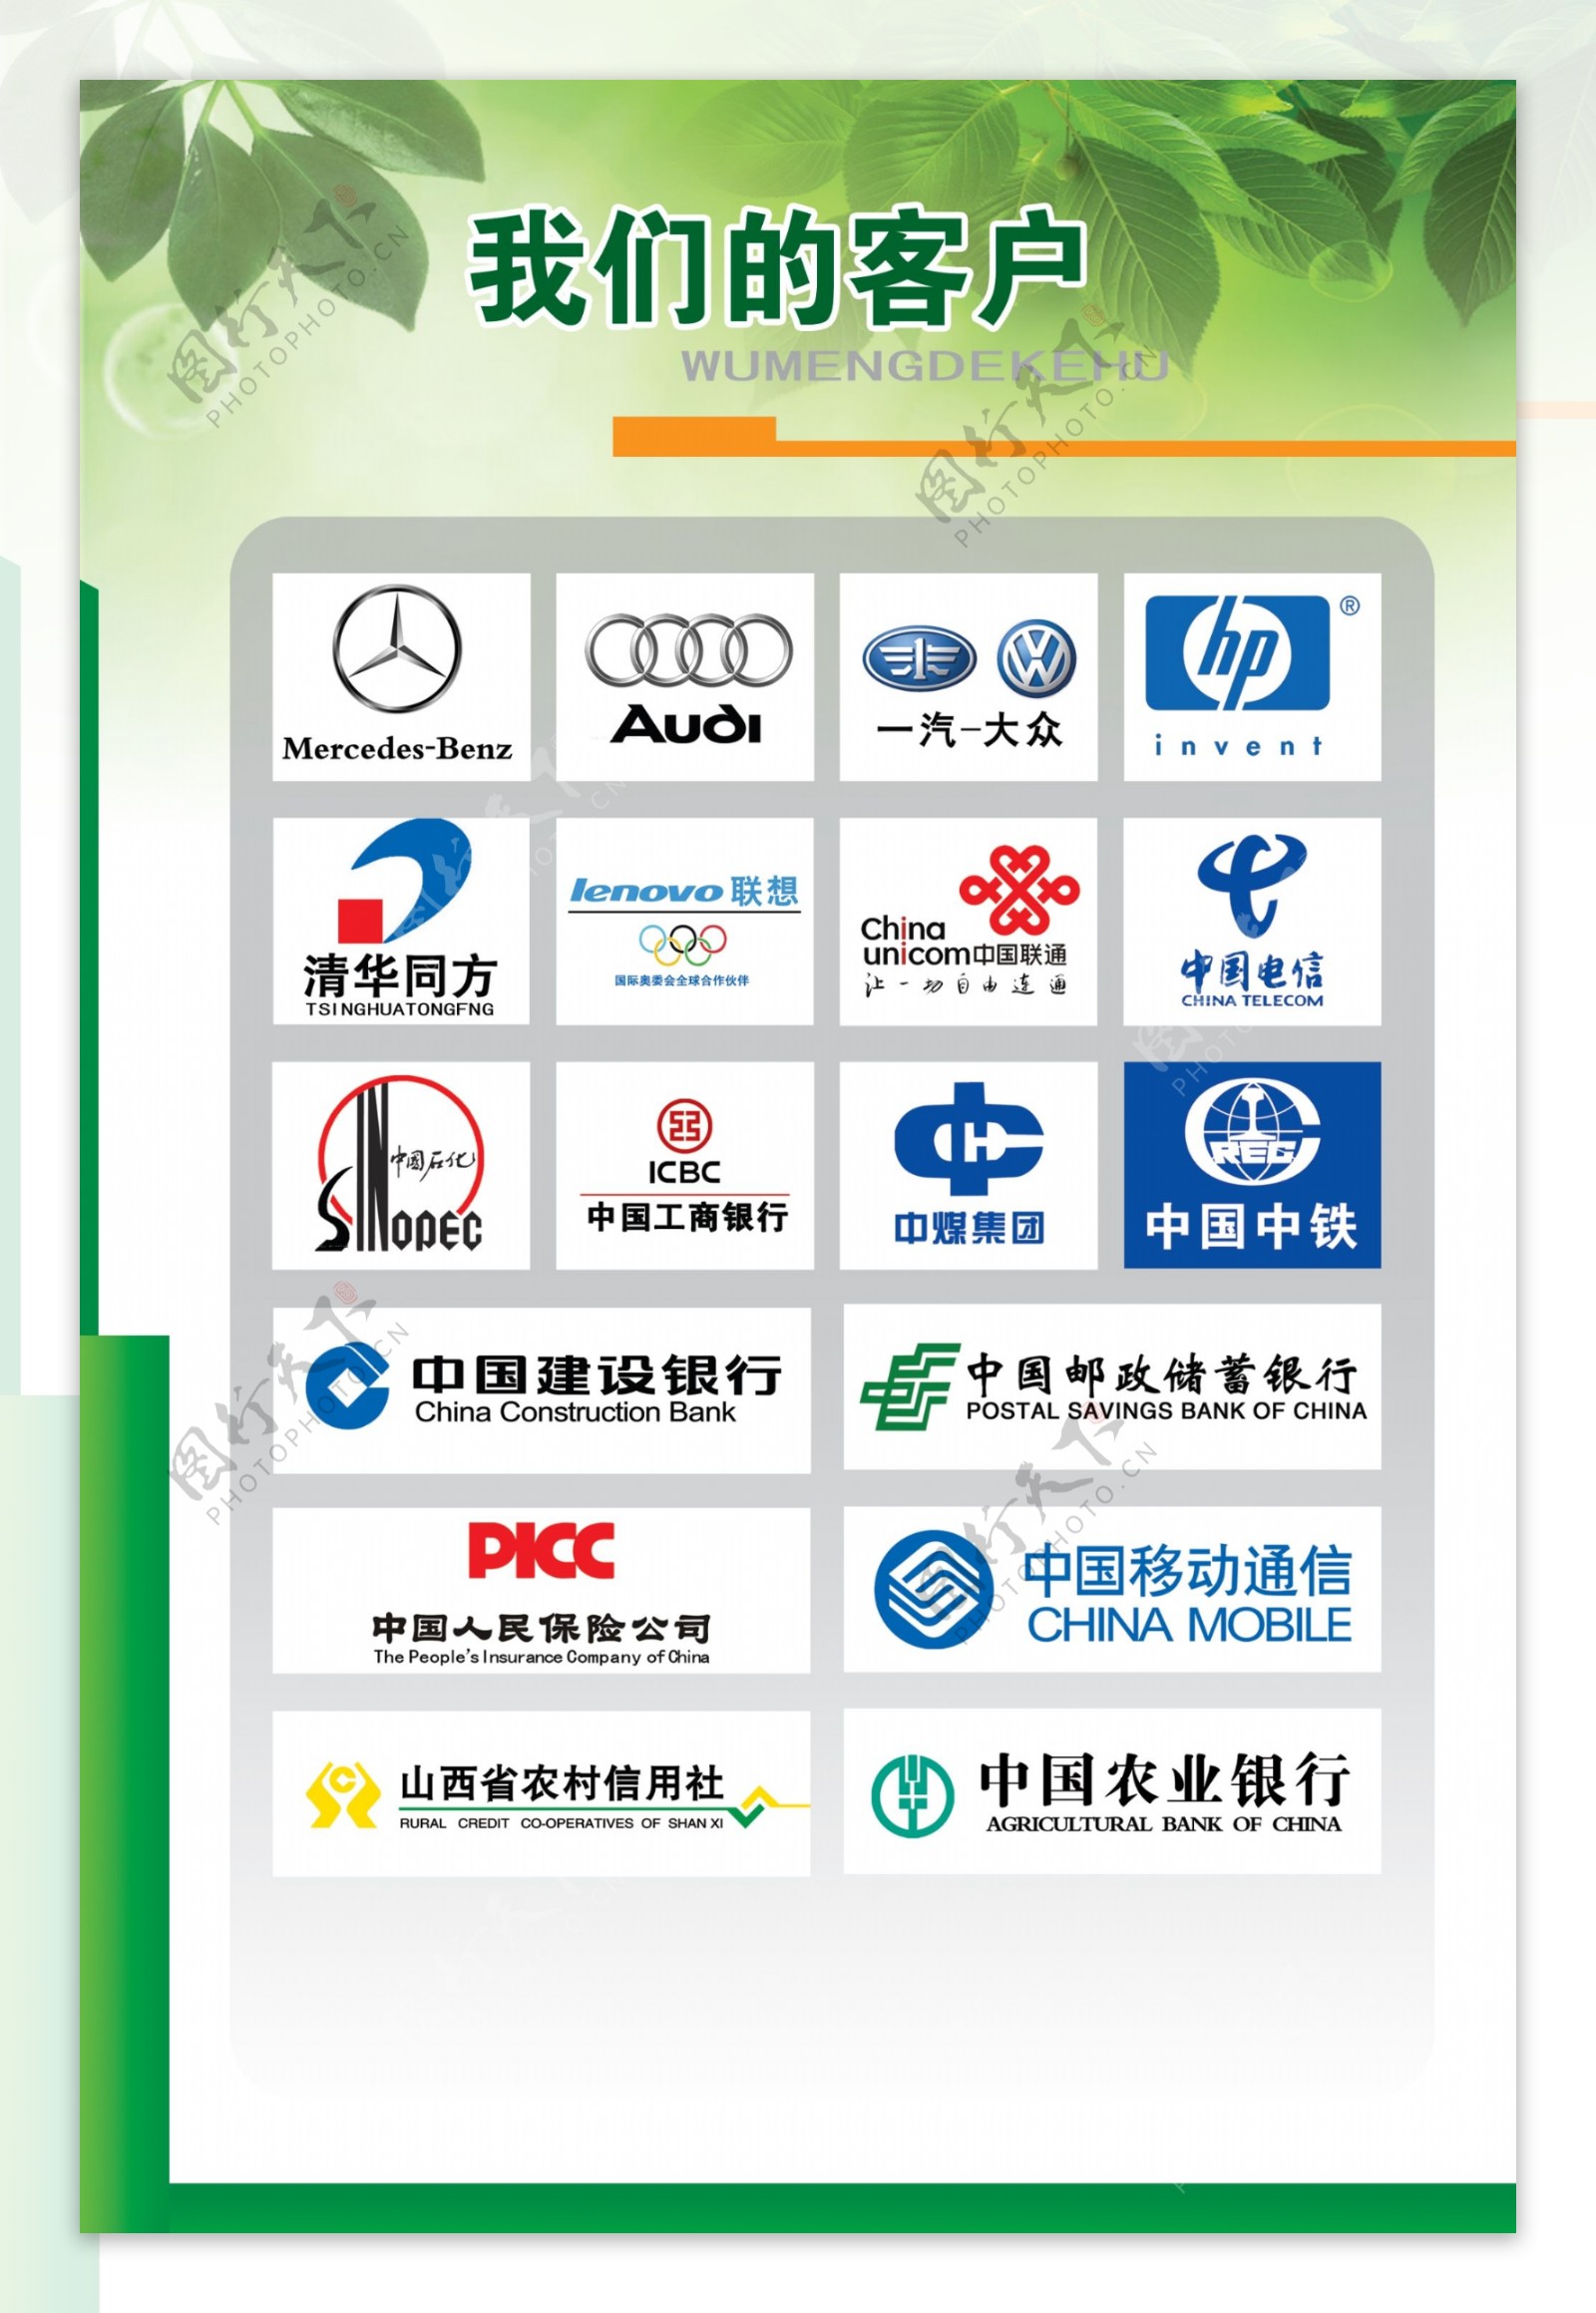 logo中国移动建设银行农业银